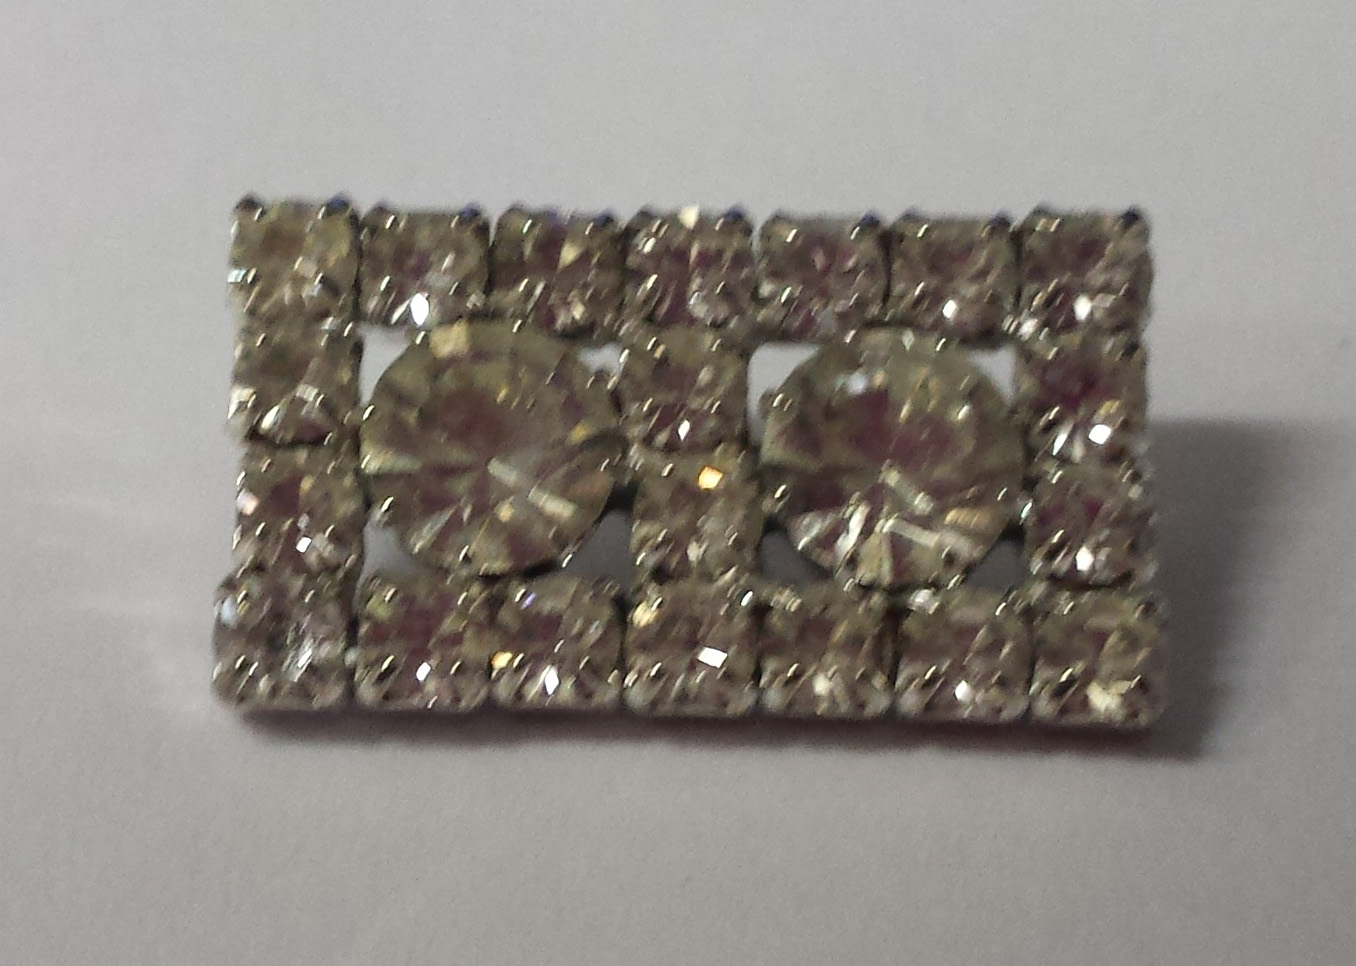 Dazzling Rectangular Rhinestone Button Crystal With Silver Back - 1 inch by 1/2 inch #Daz0024